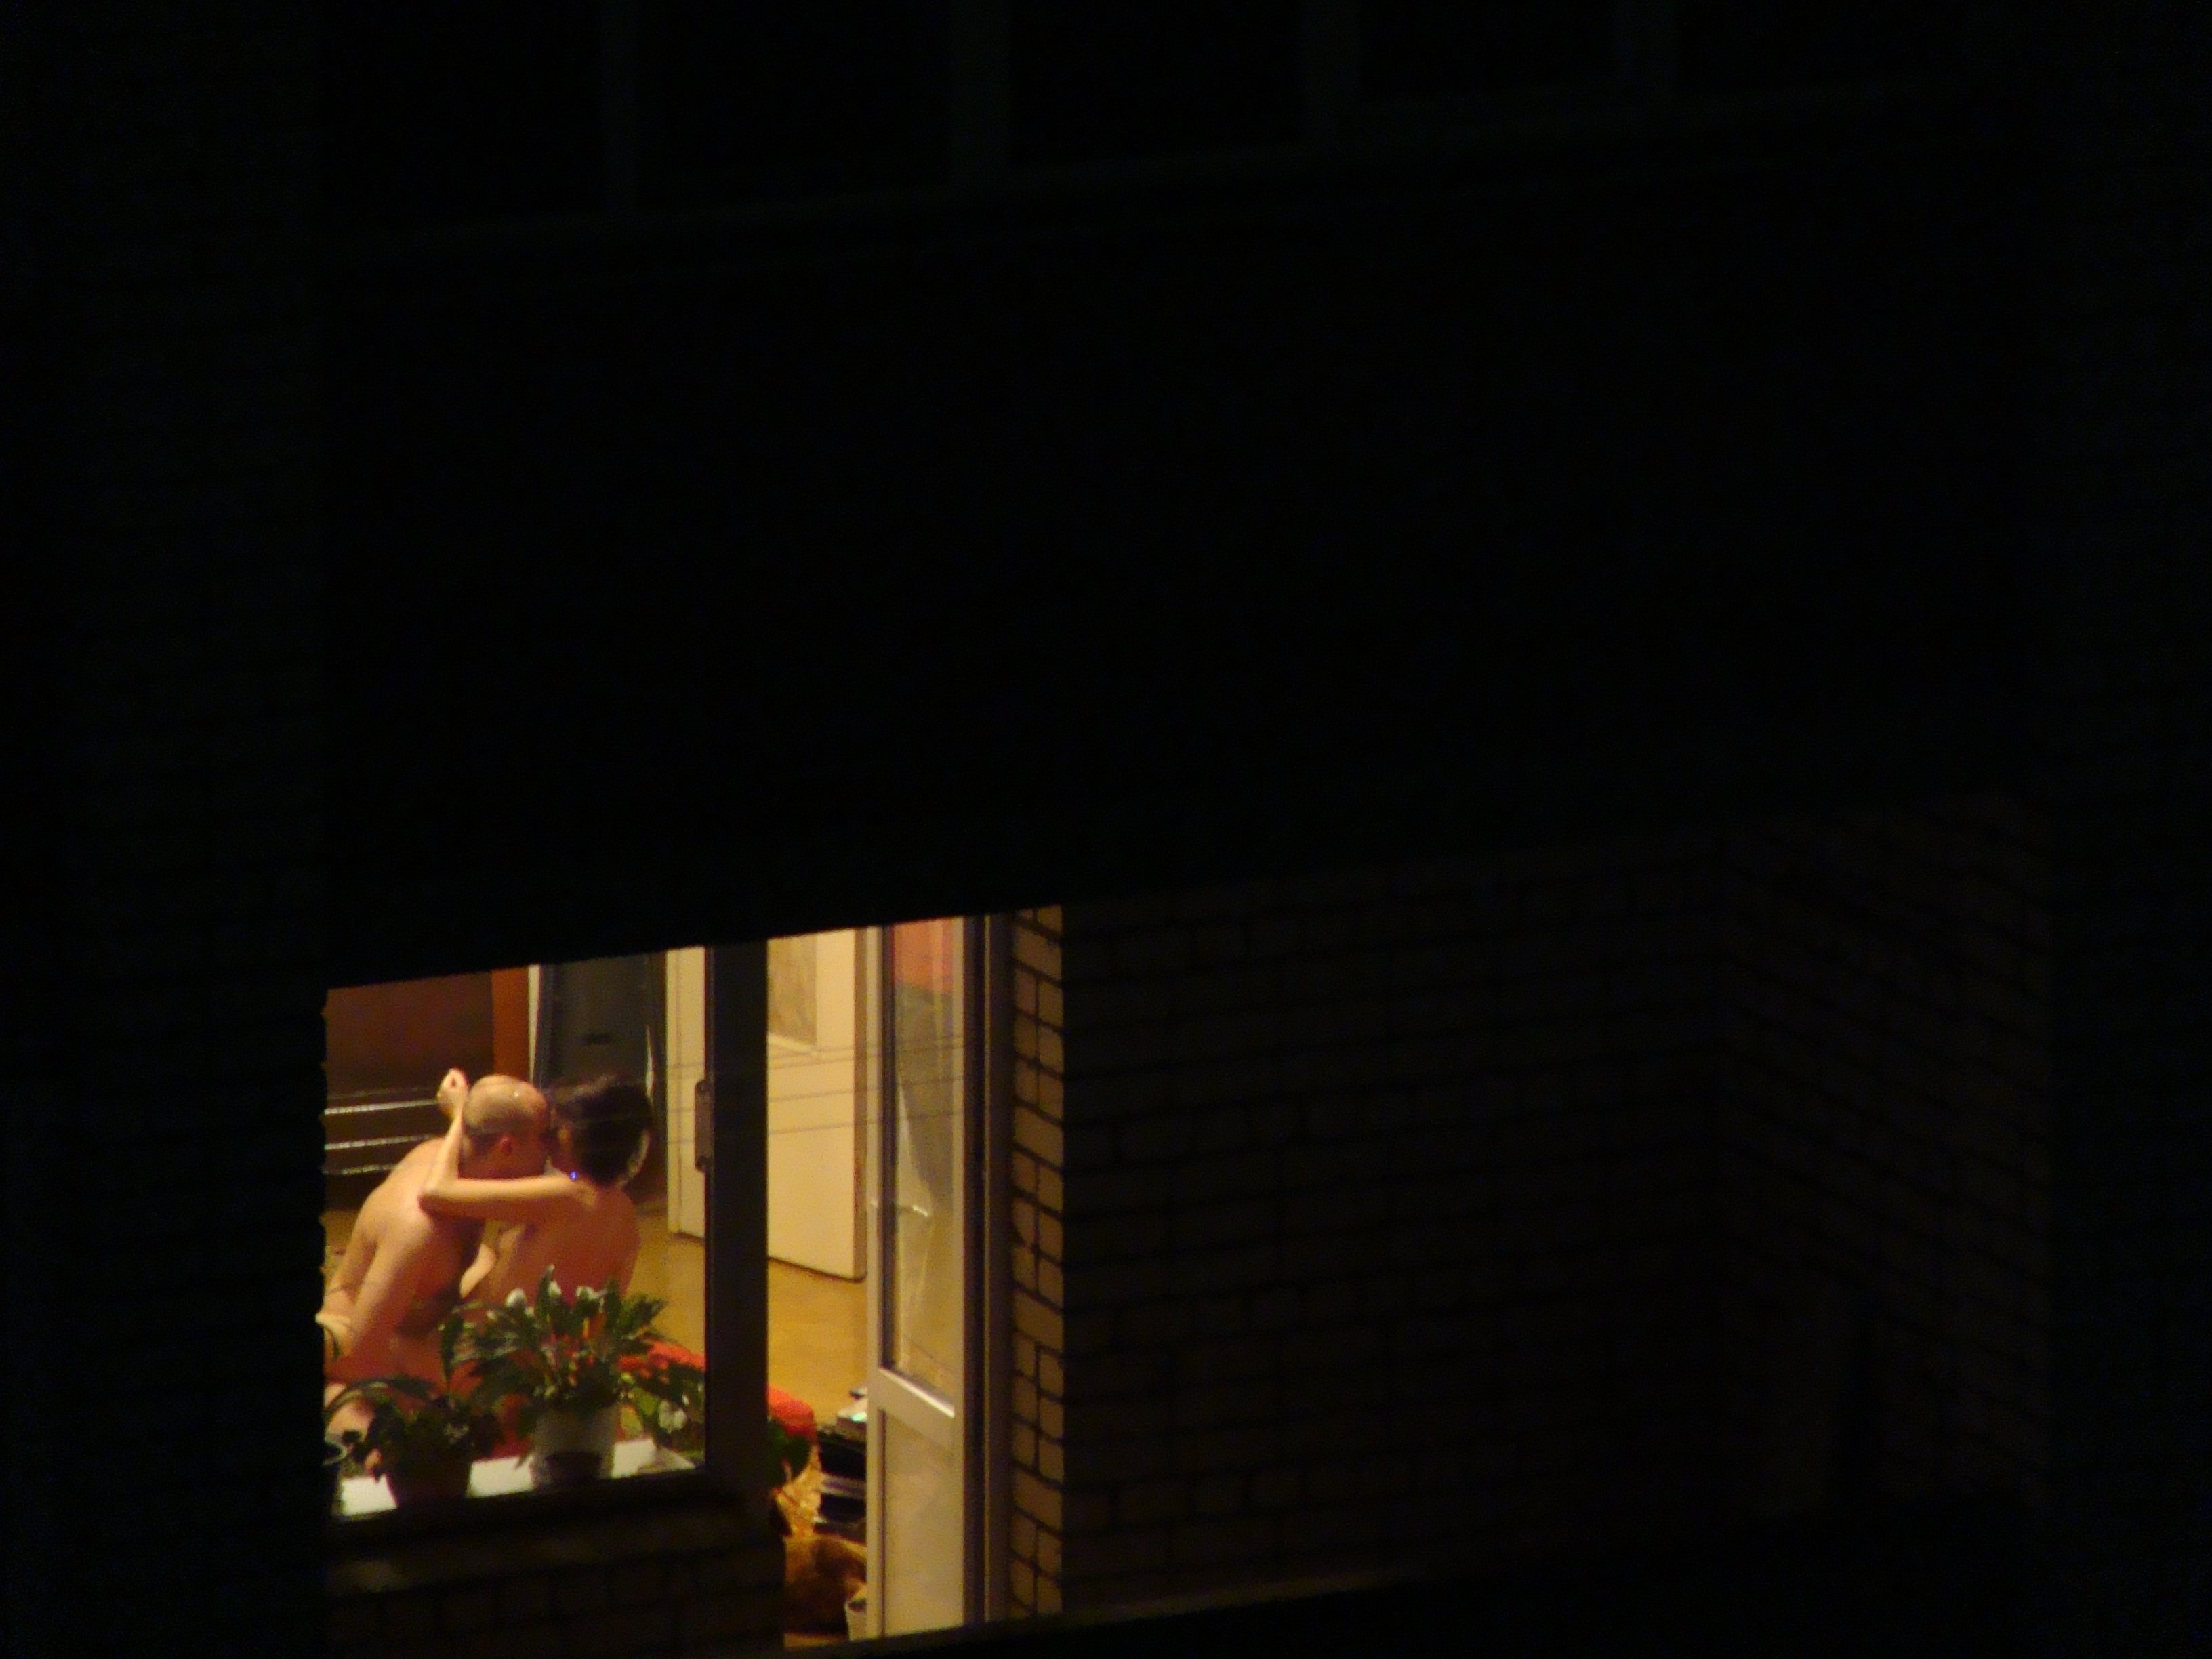 голая тетка в окне фото 48